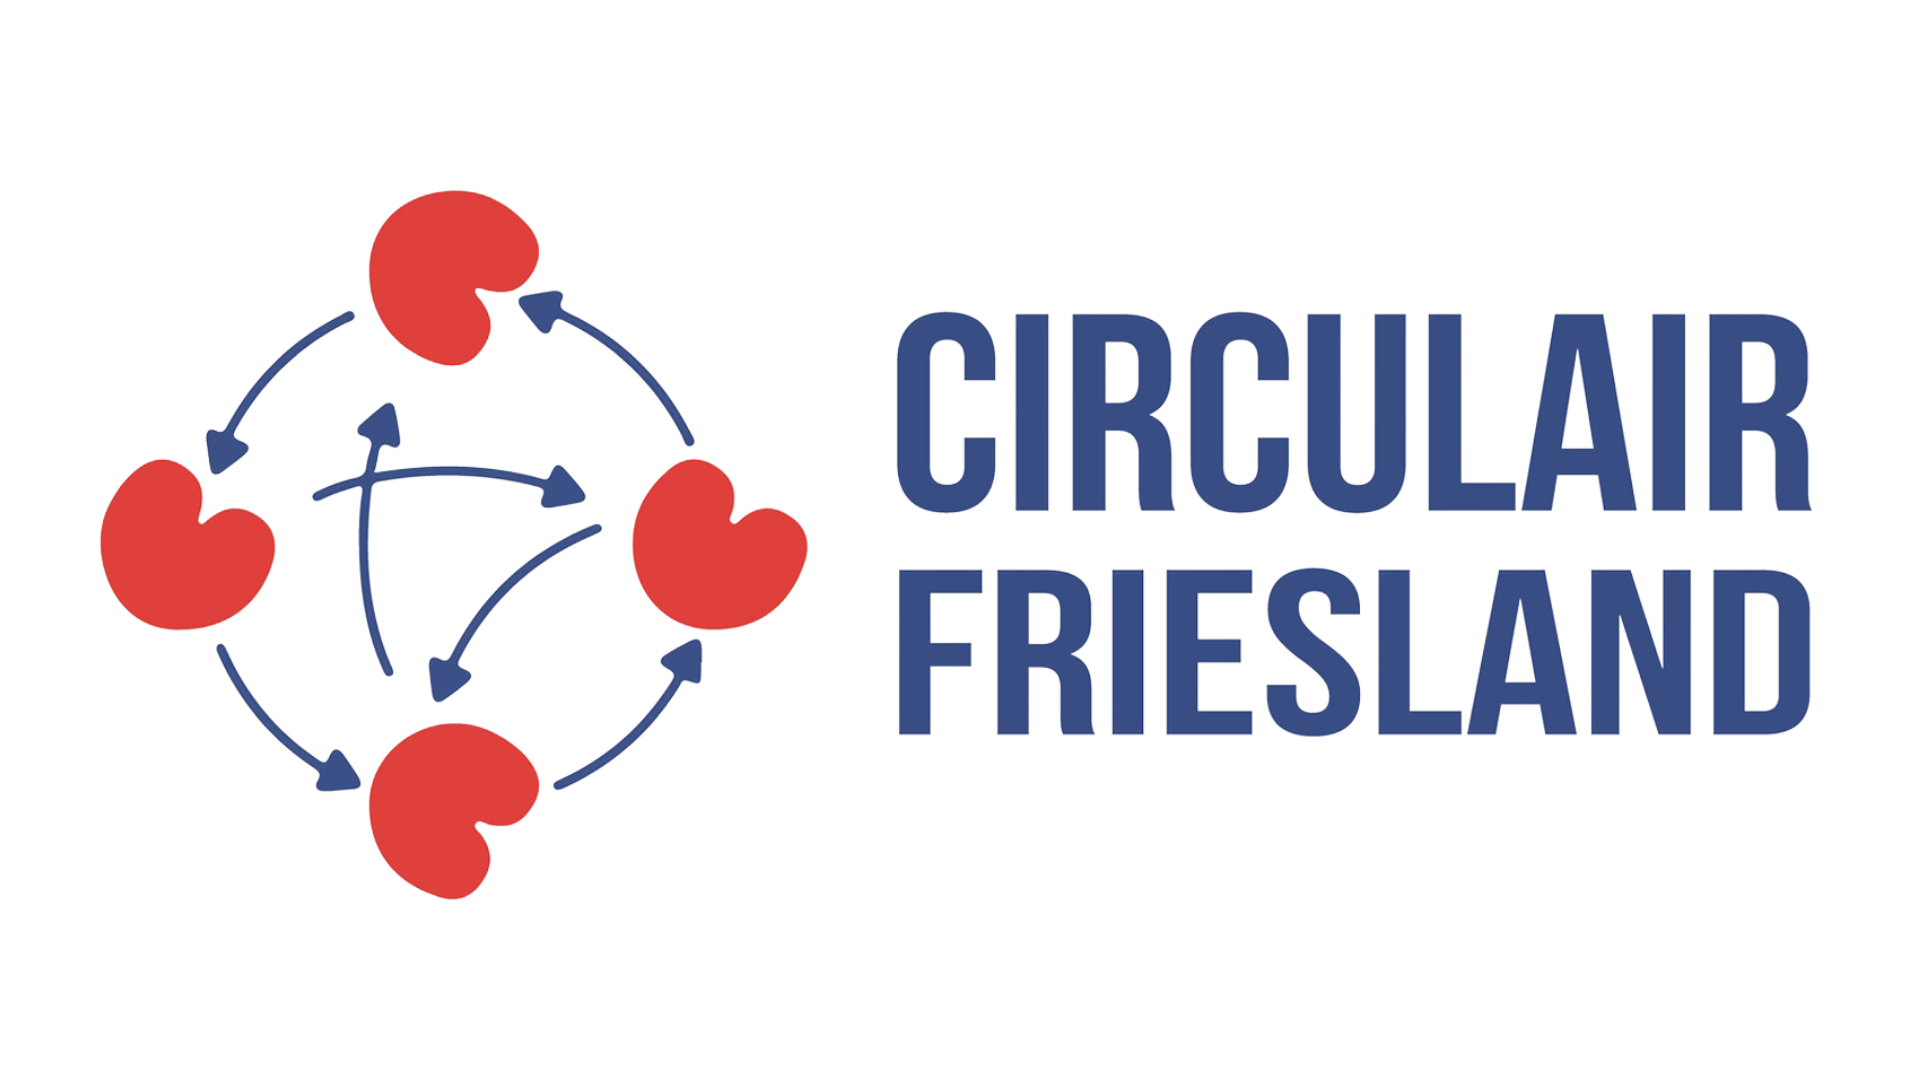 Vereniging Circulair Friesland logo transparant